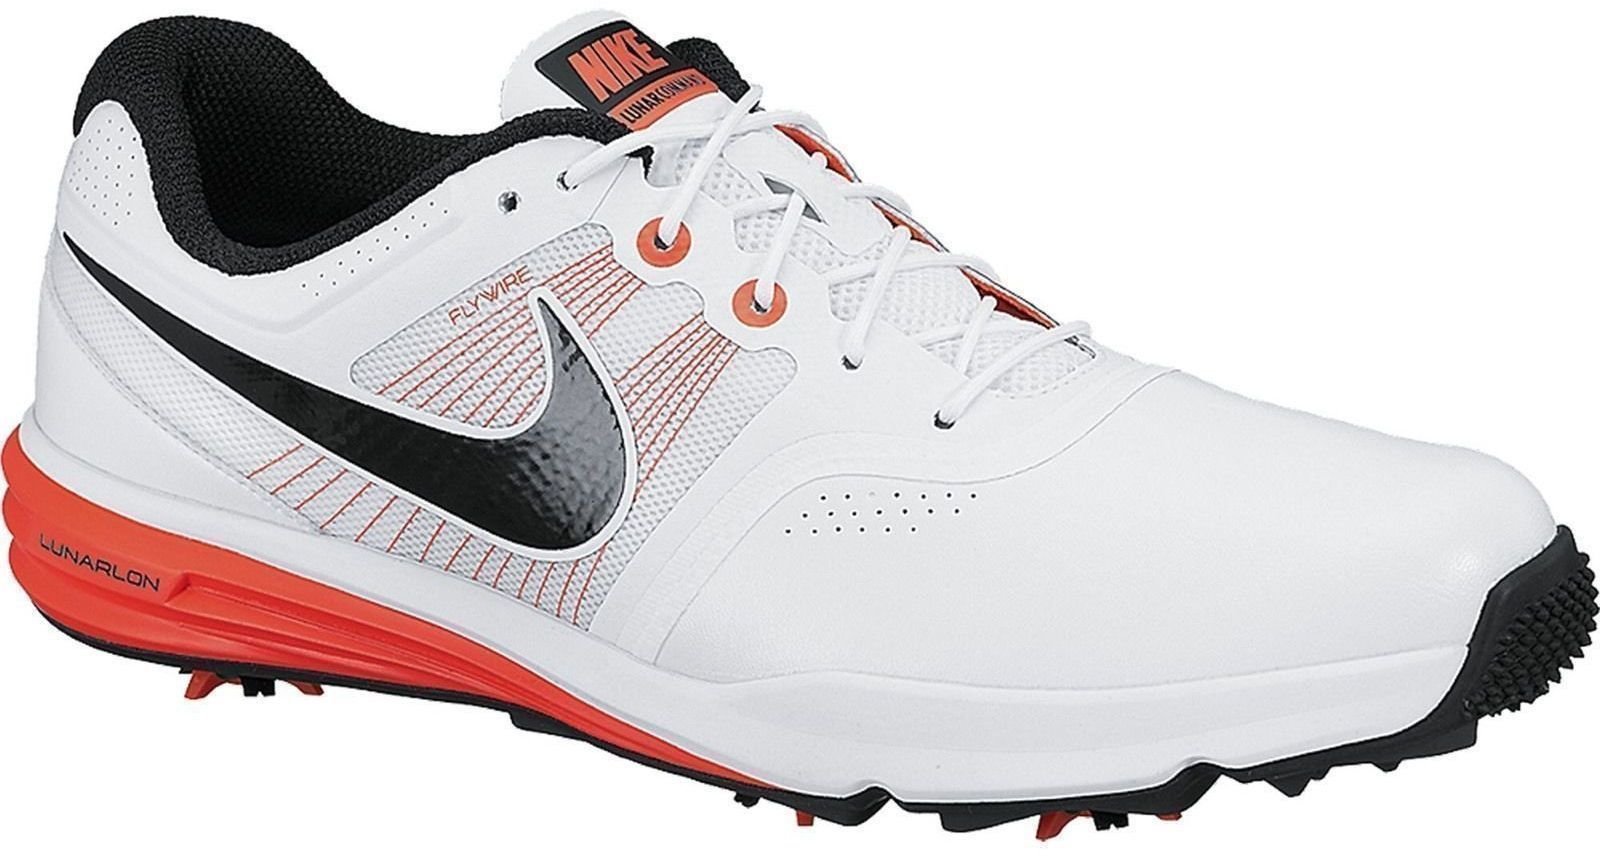 Herren Golfschuhe Nike Lunar Command Golfschuhe Herren White/Black/Crimson US 10